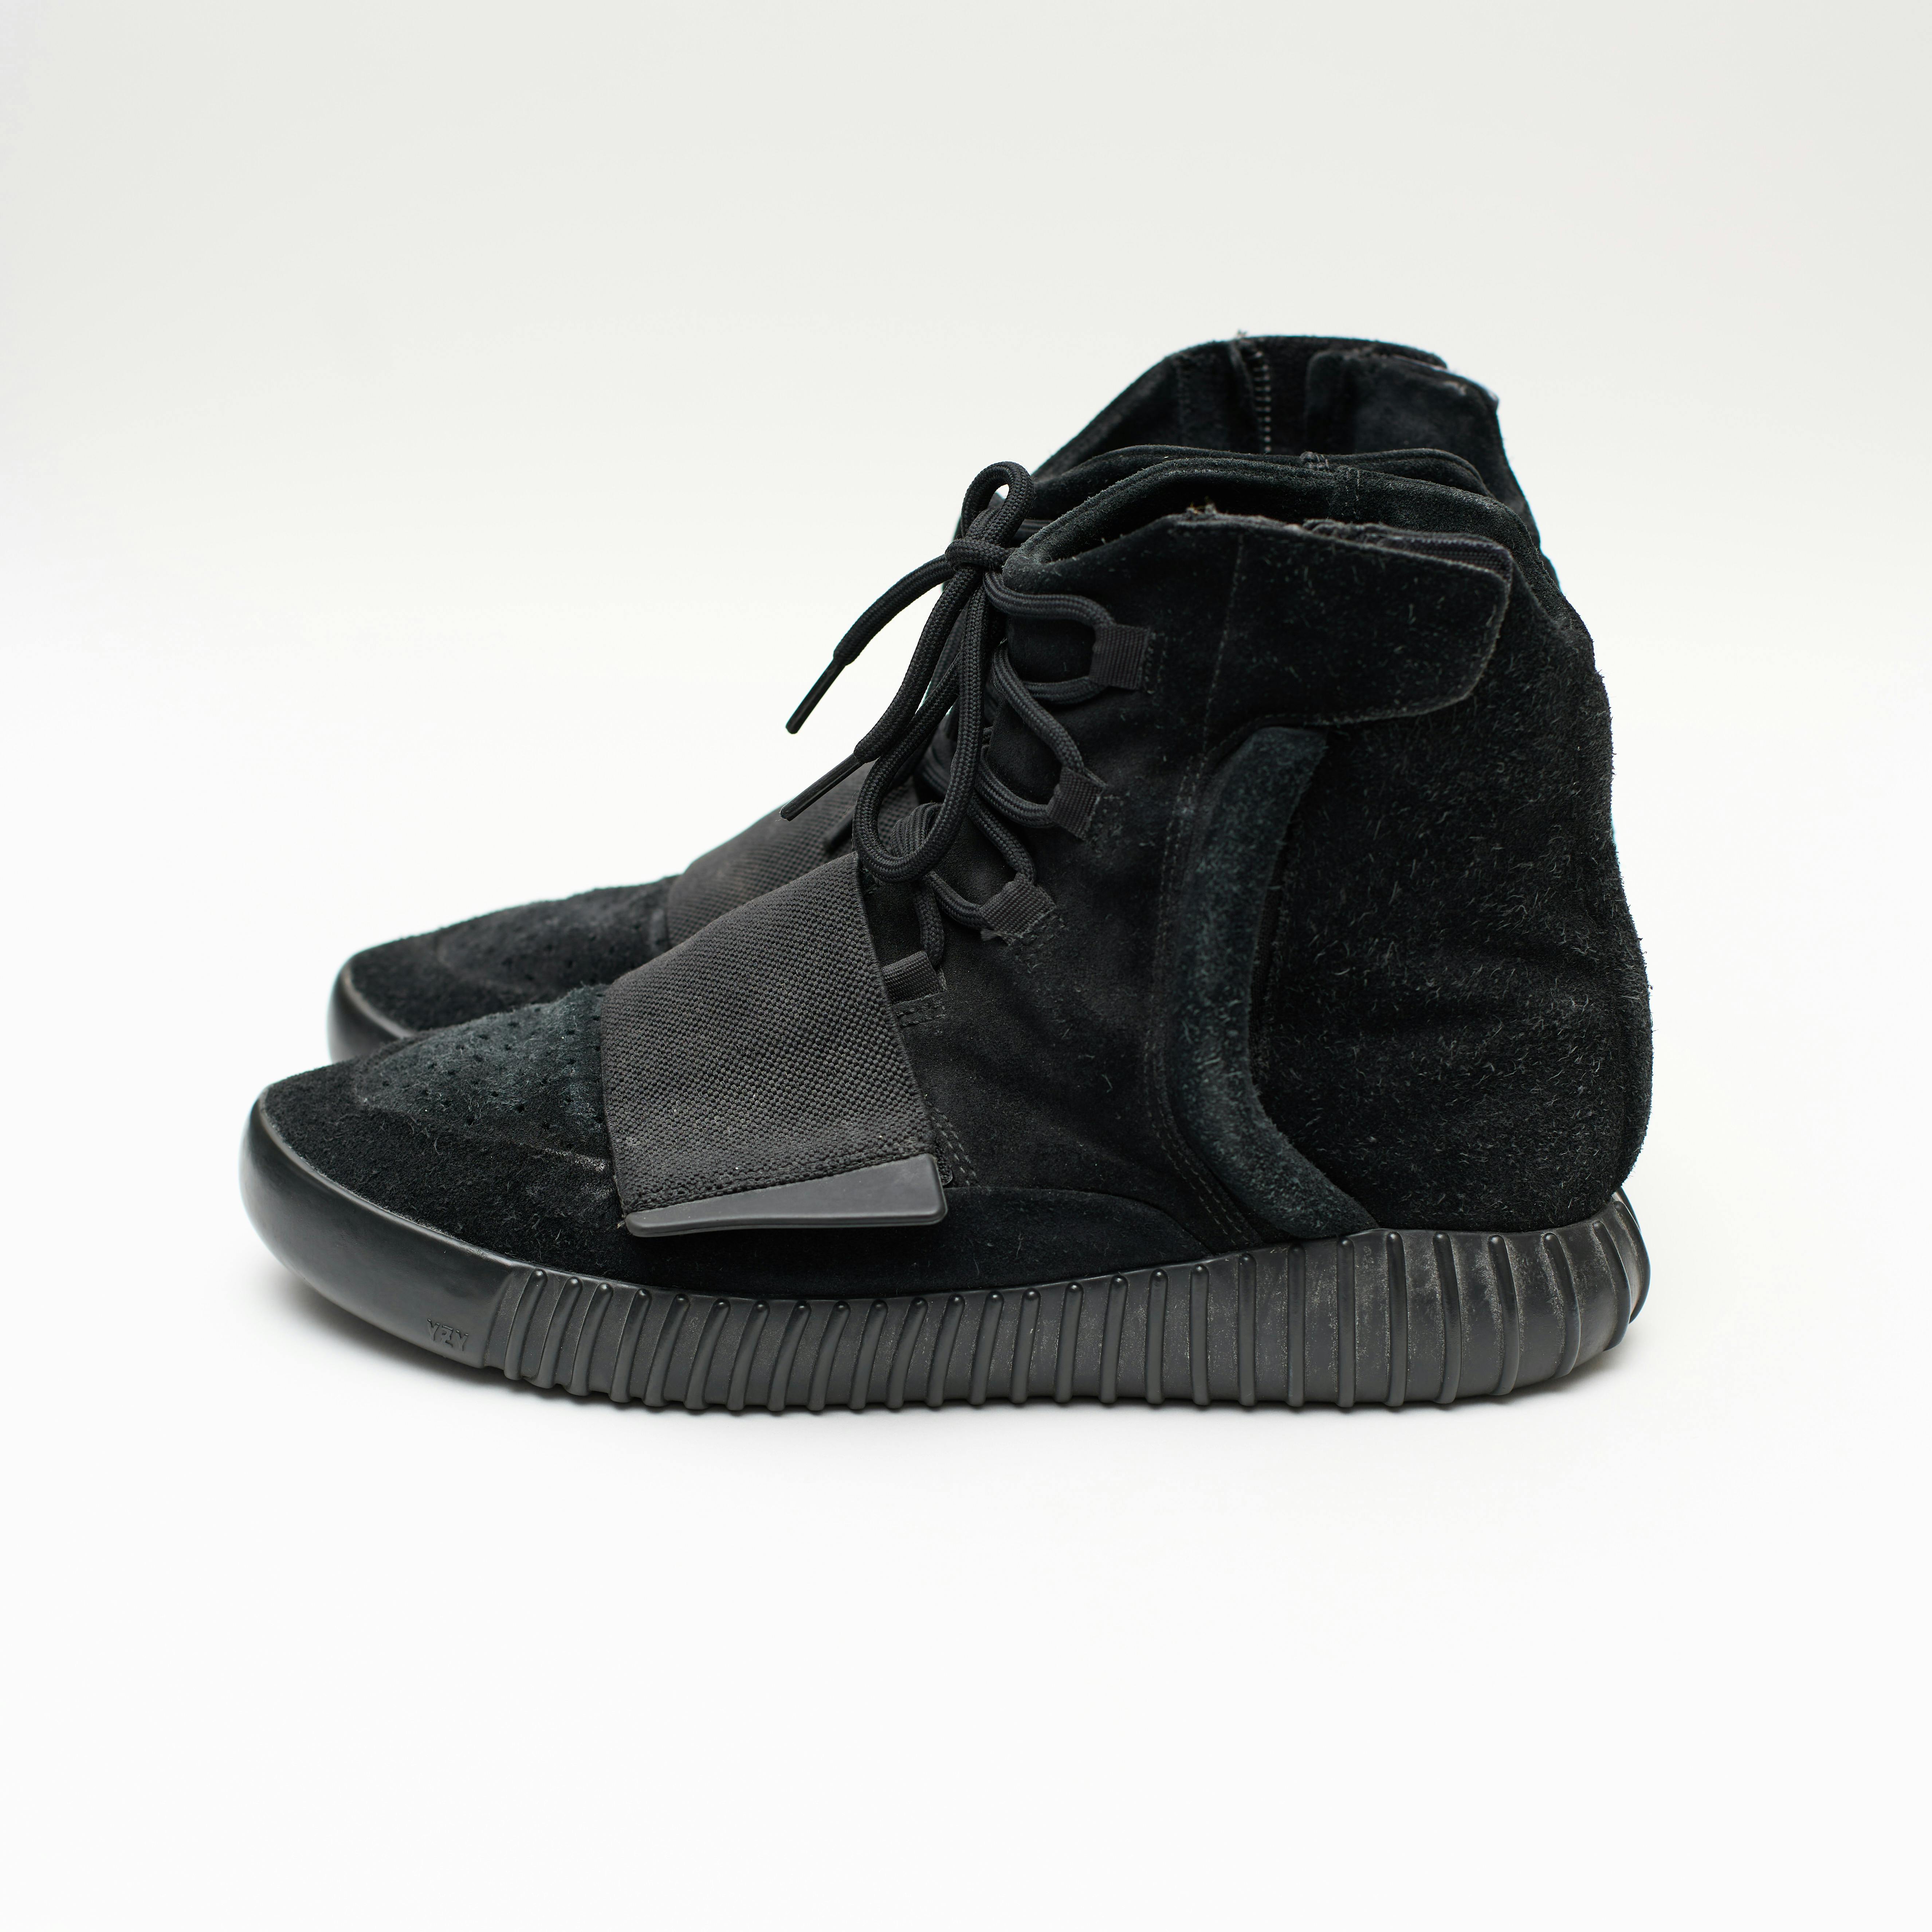 Adidas Yeezy Boost 750 Triple Black Size 10 - 1